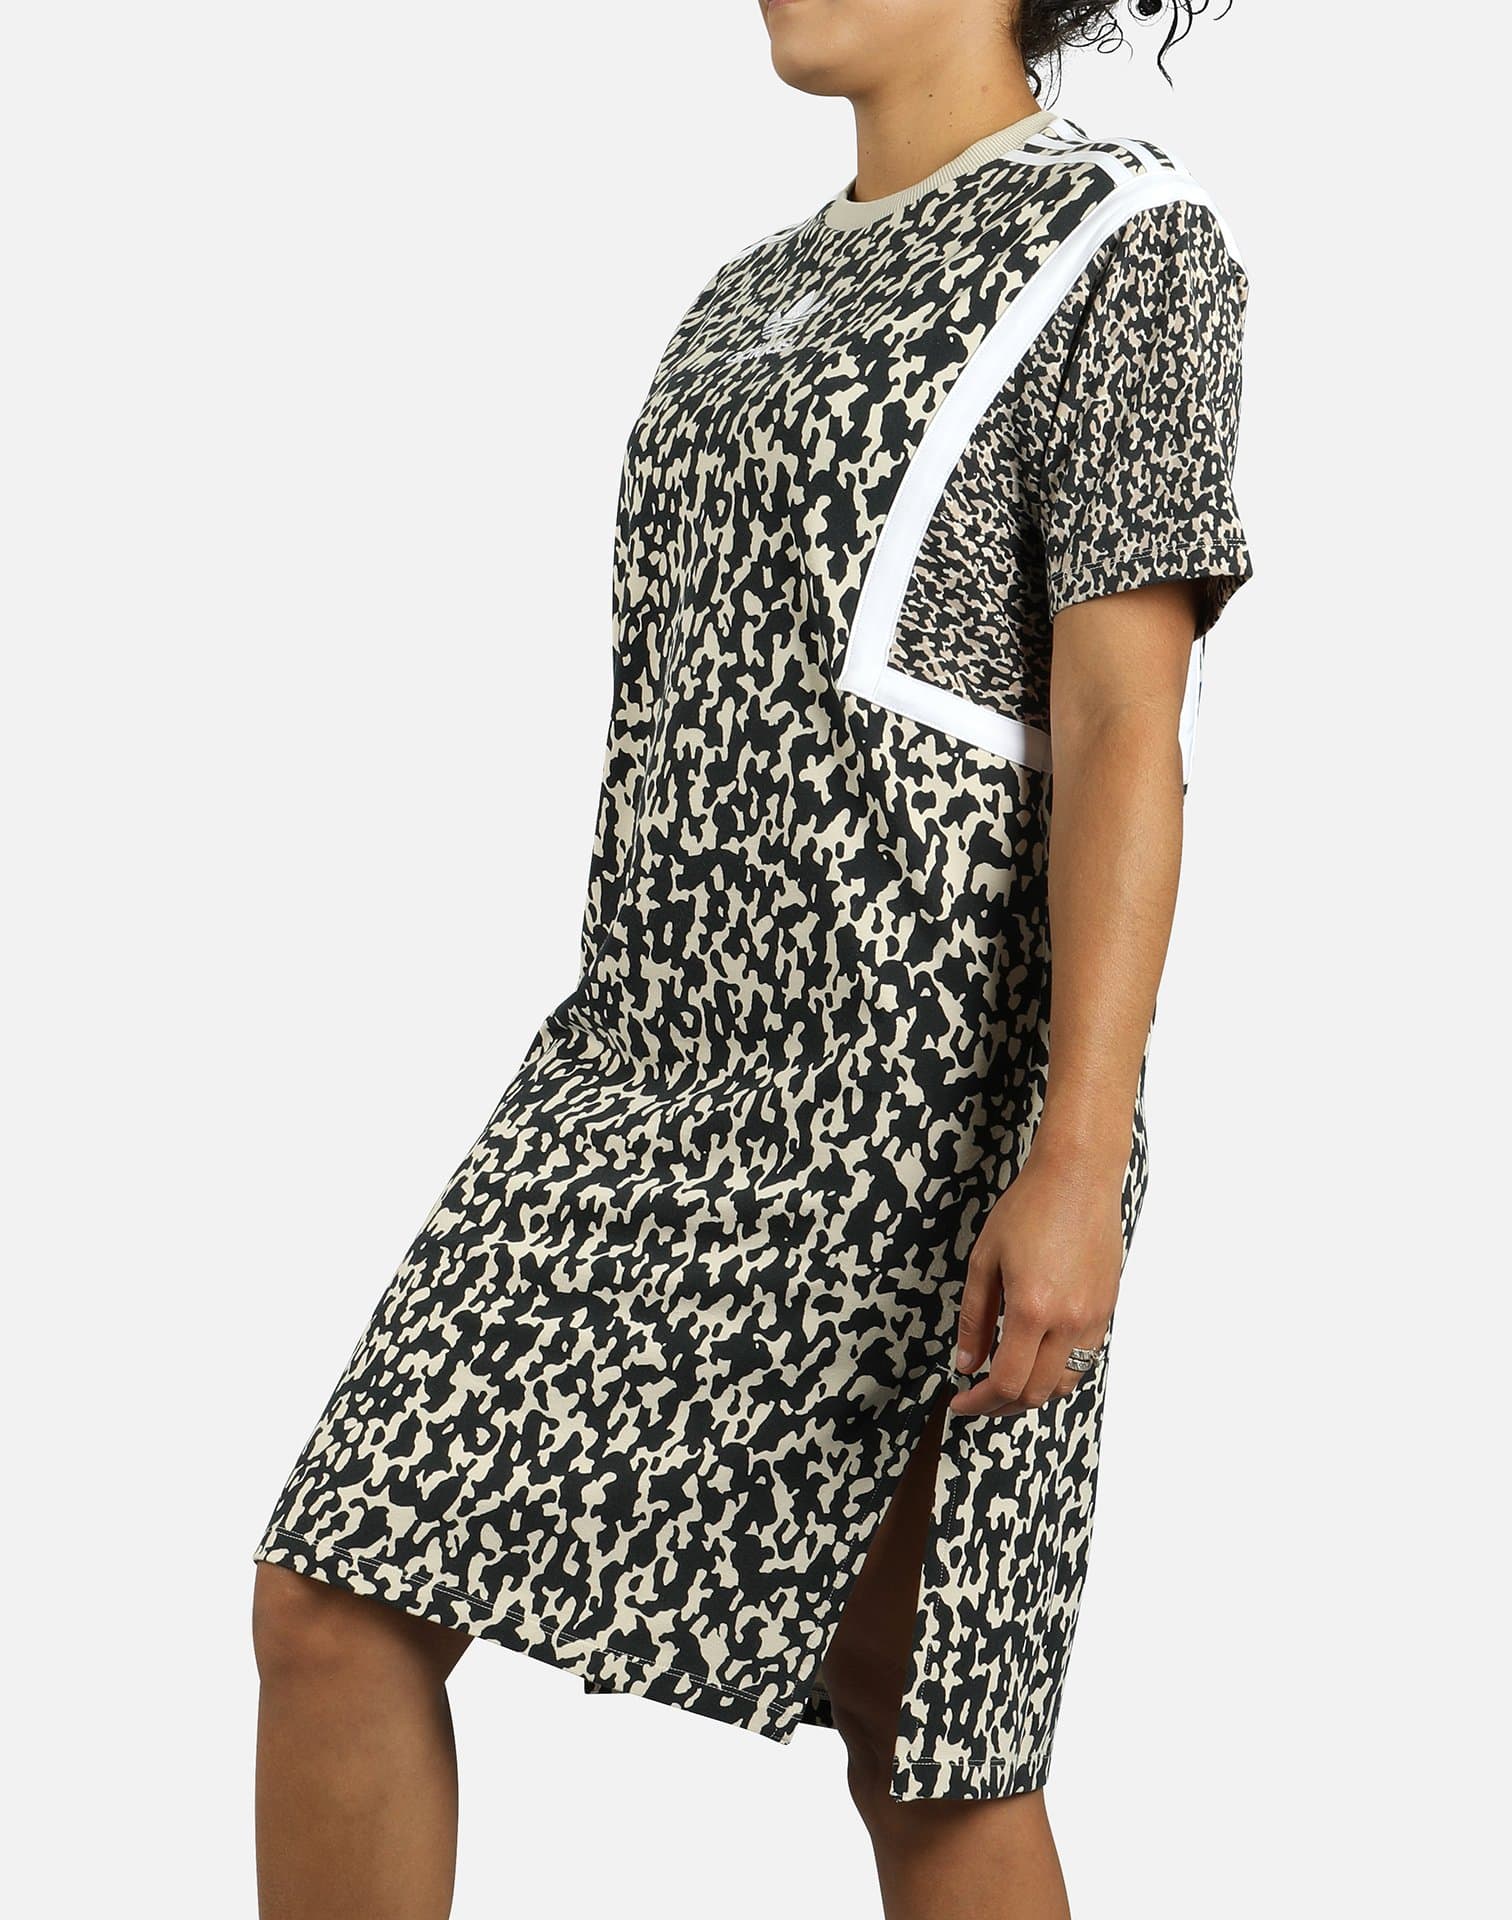 adidas Women's Leoflage Tee Dress